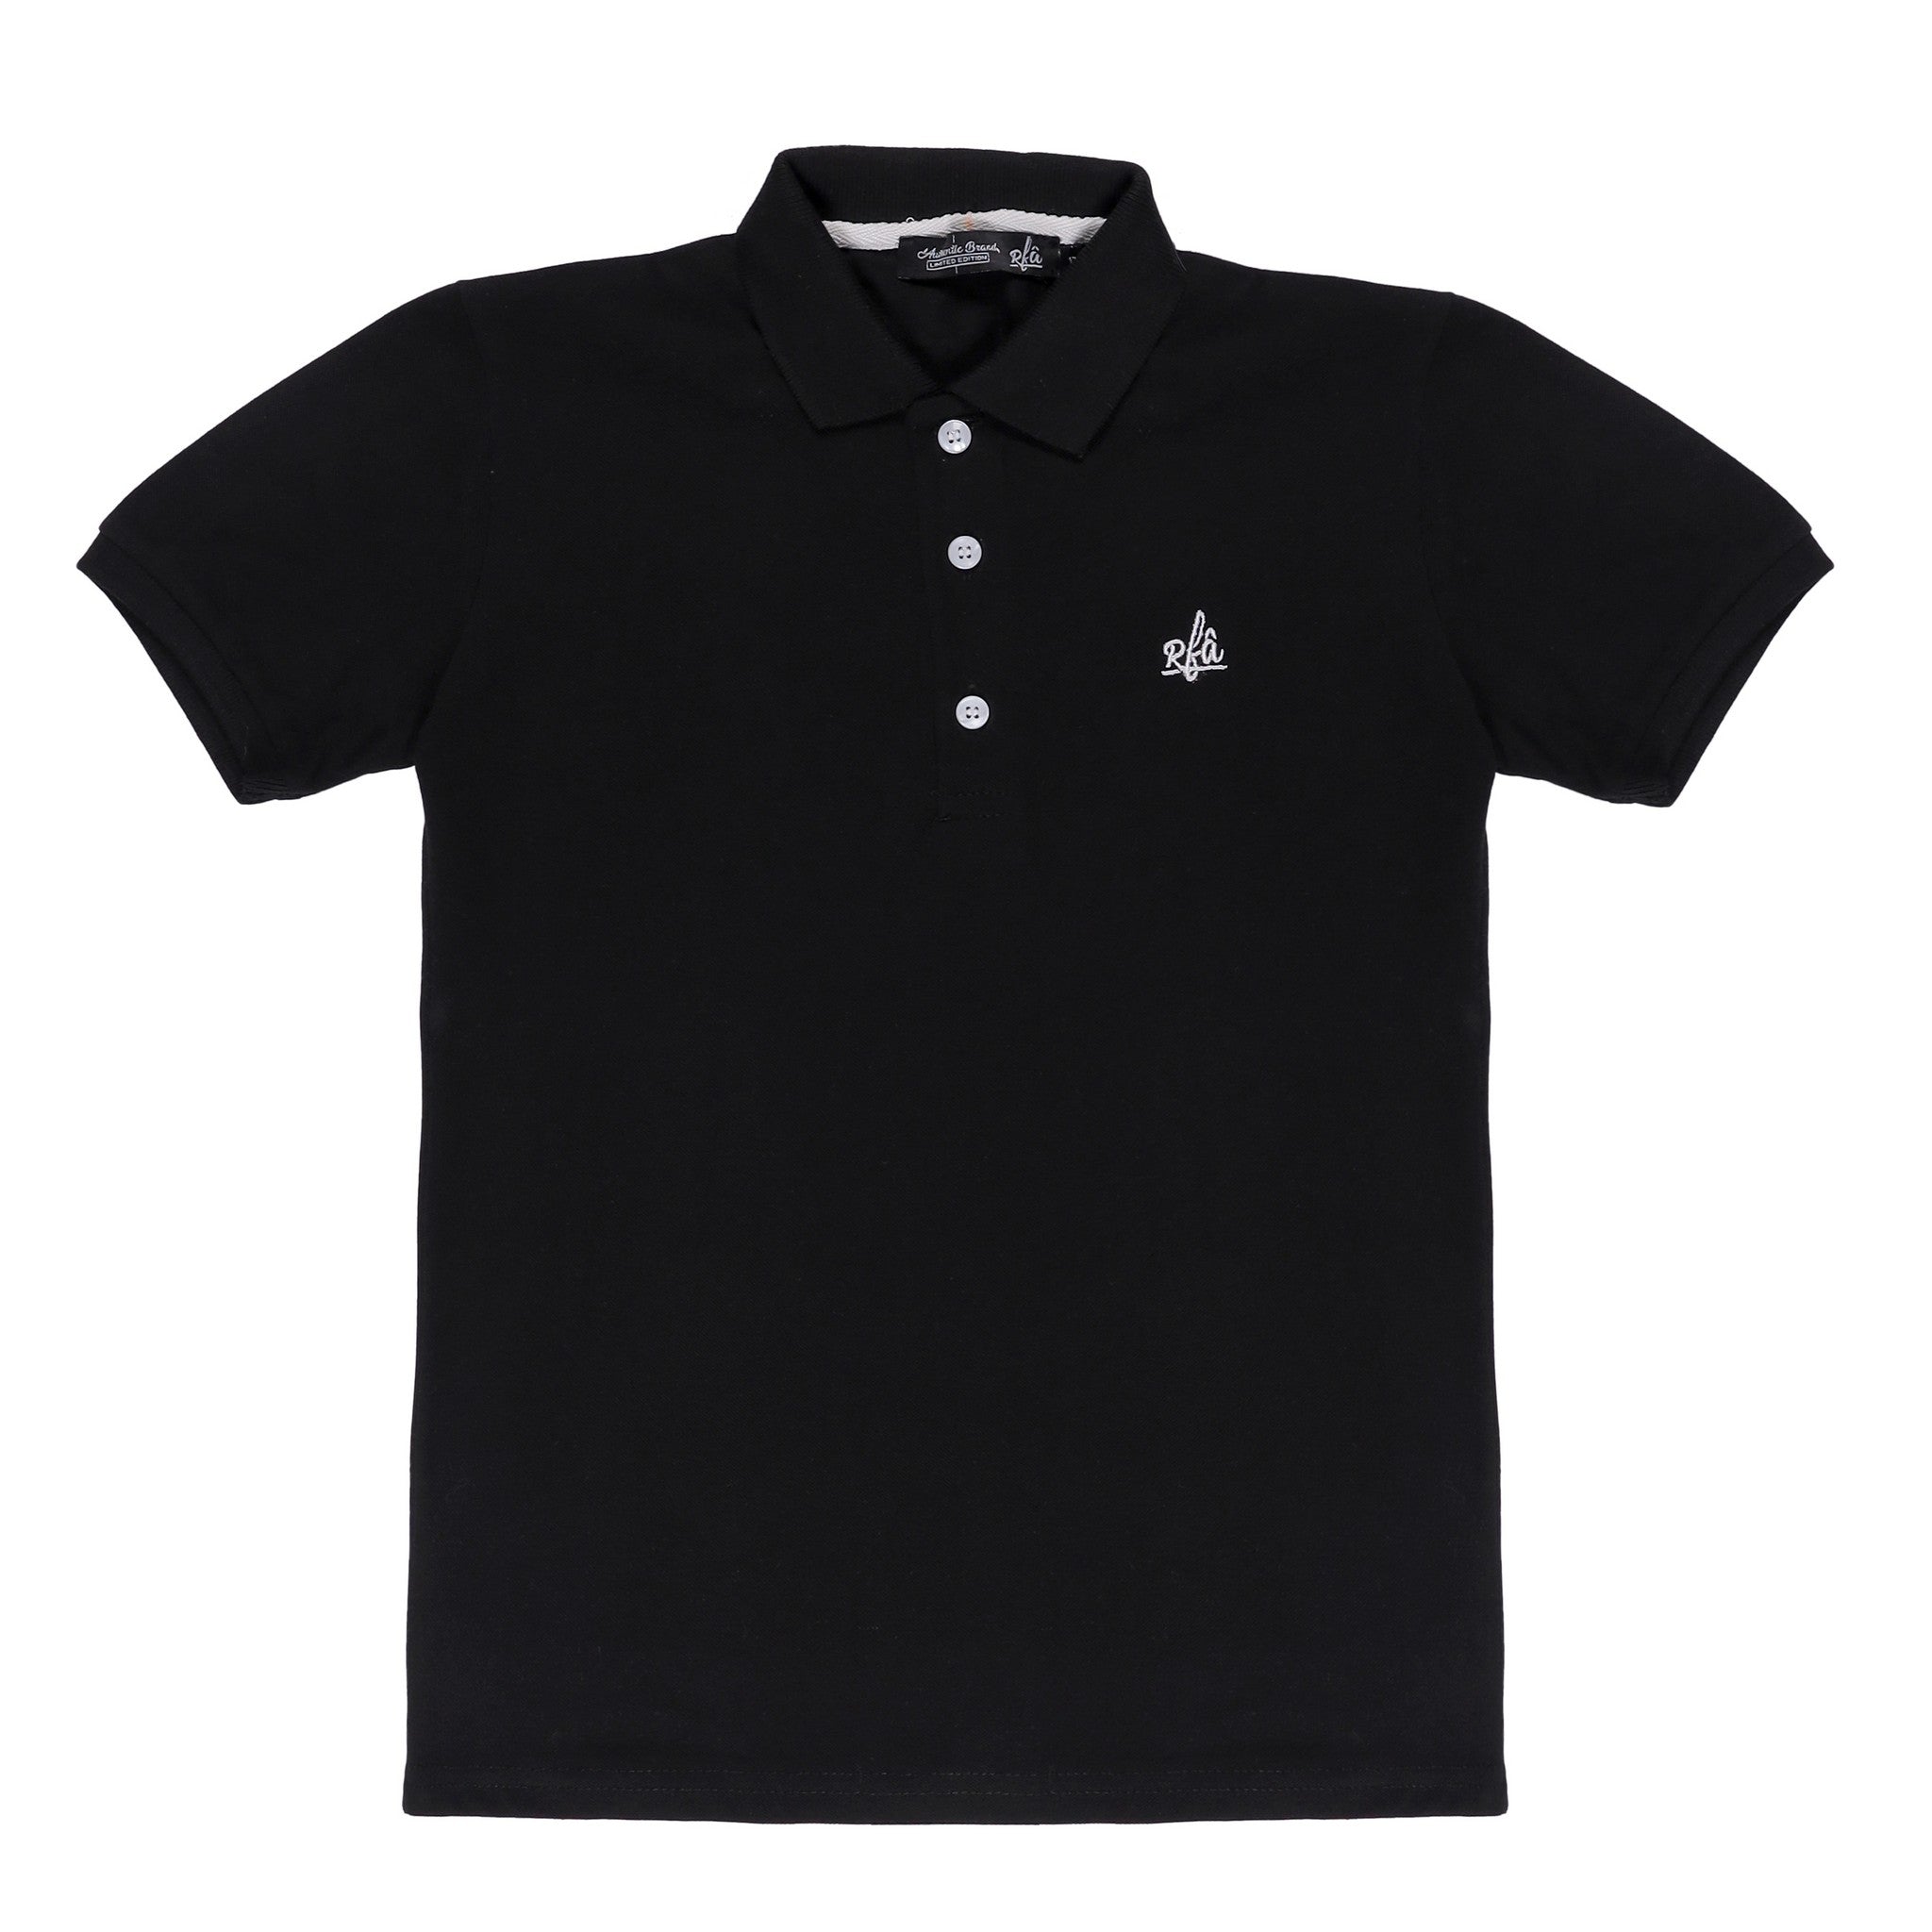 Rfa Black Polo Shirt